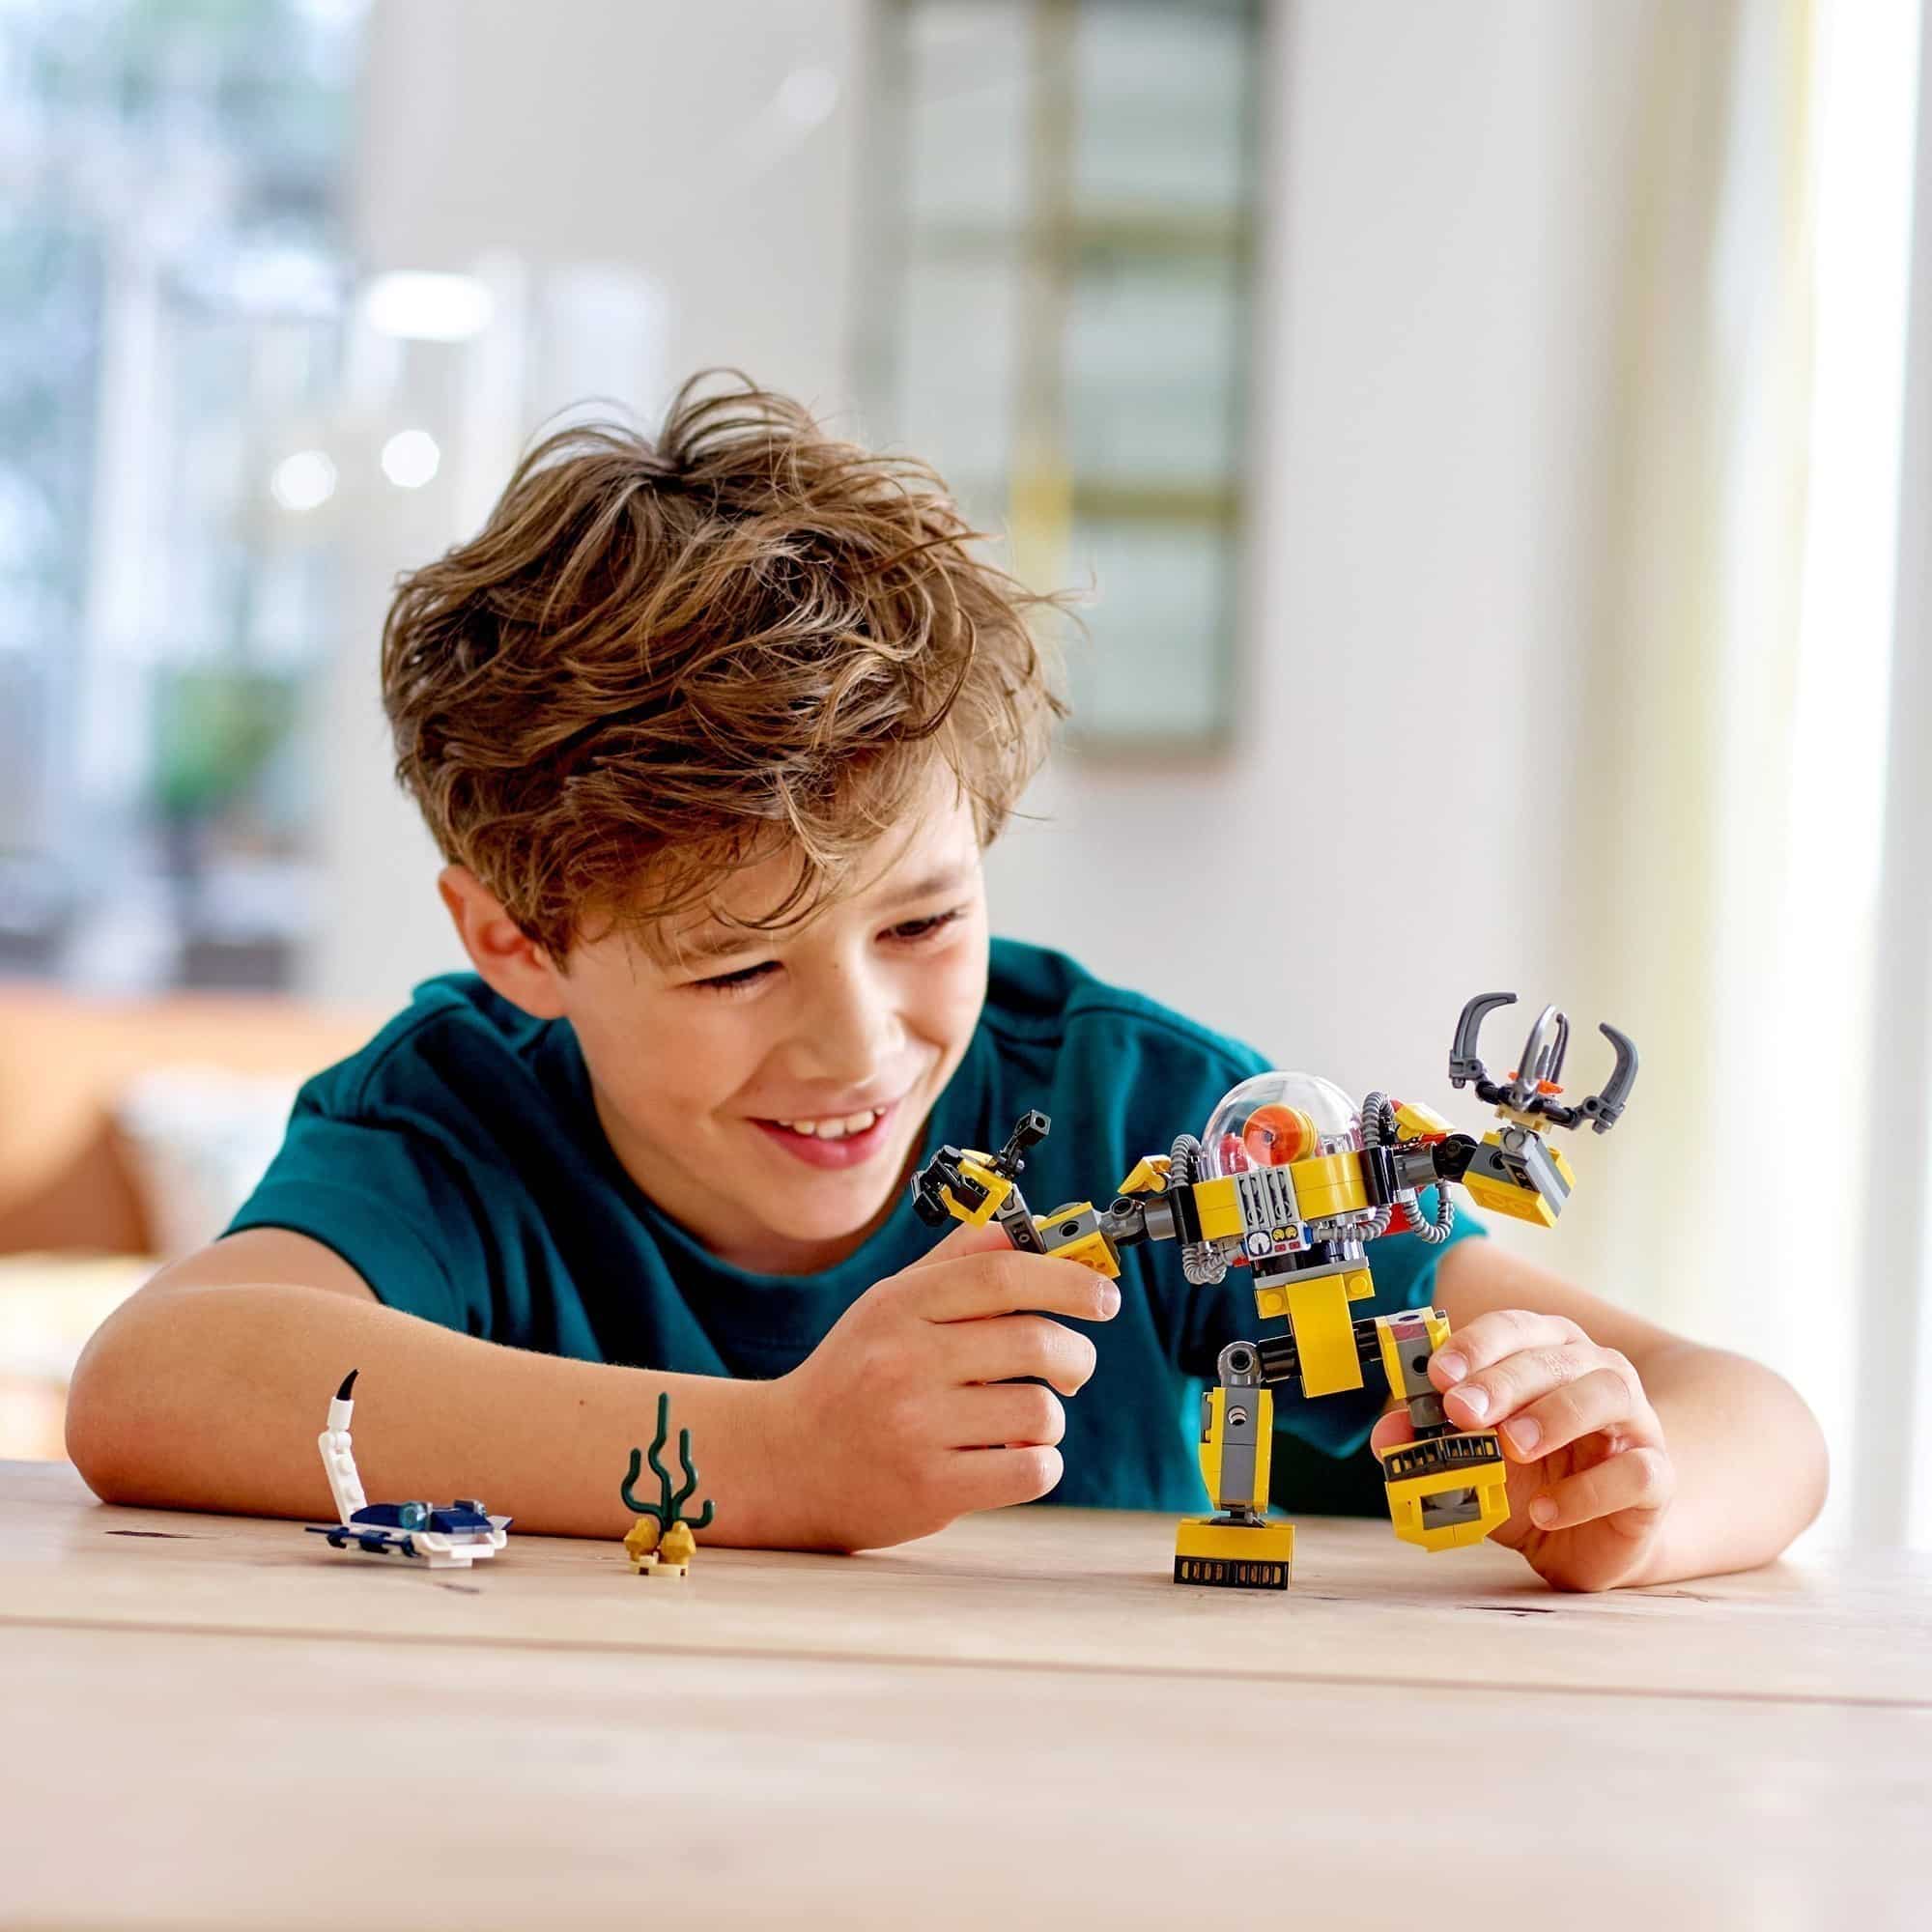 LEGO® Creator 31090 - Underwater Robot